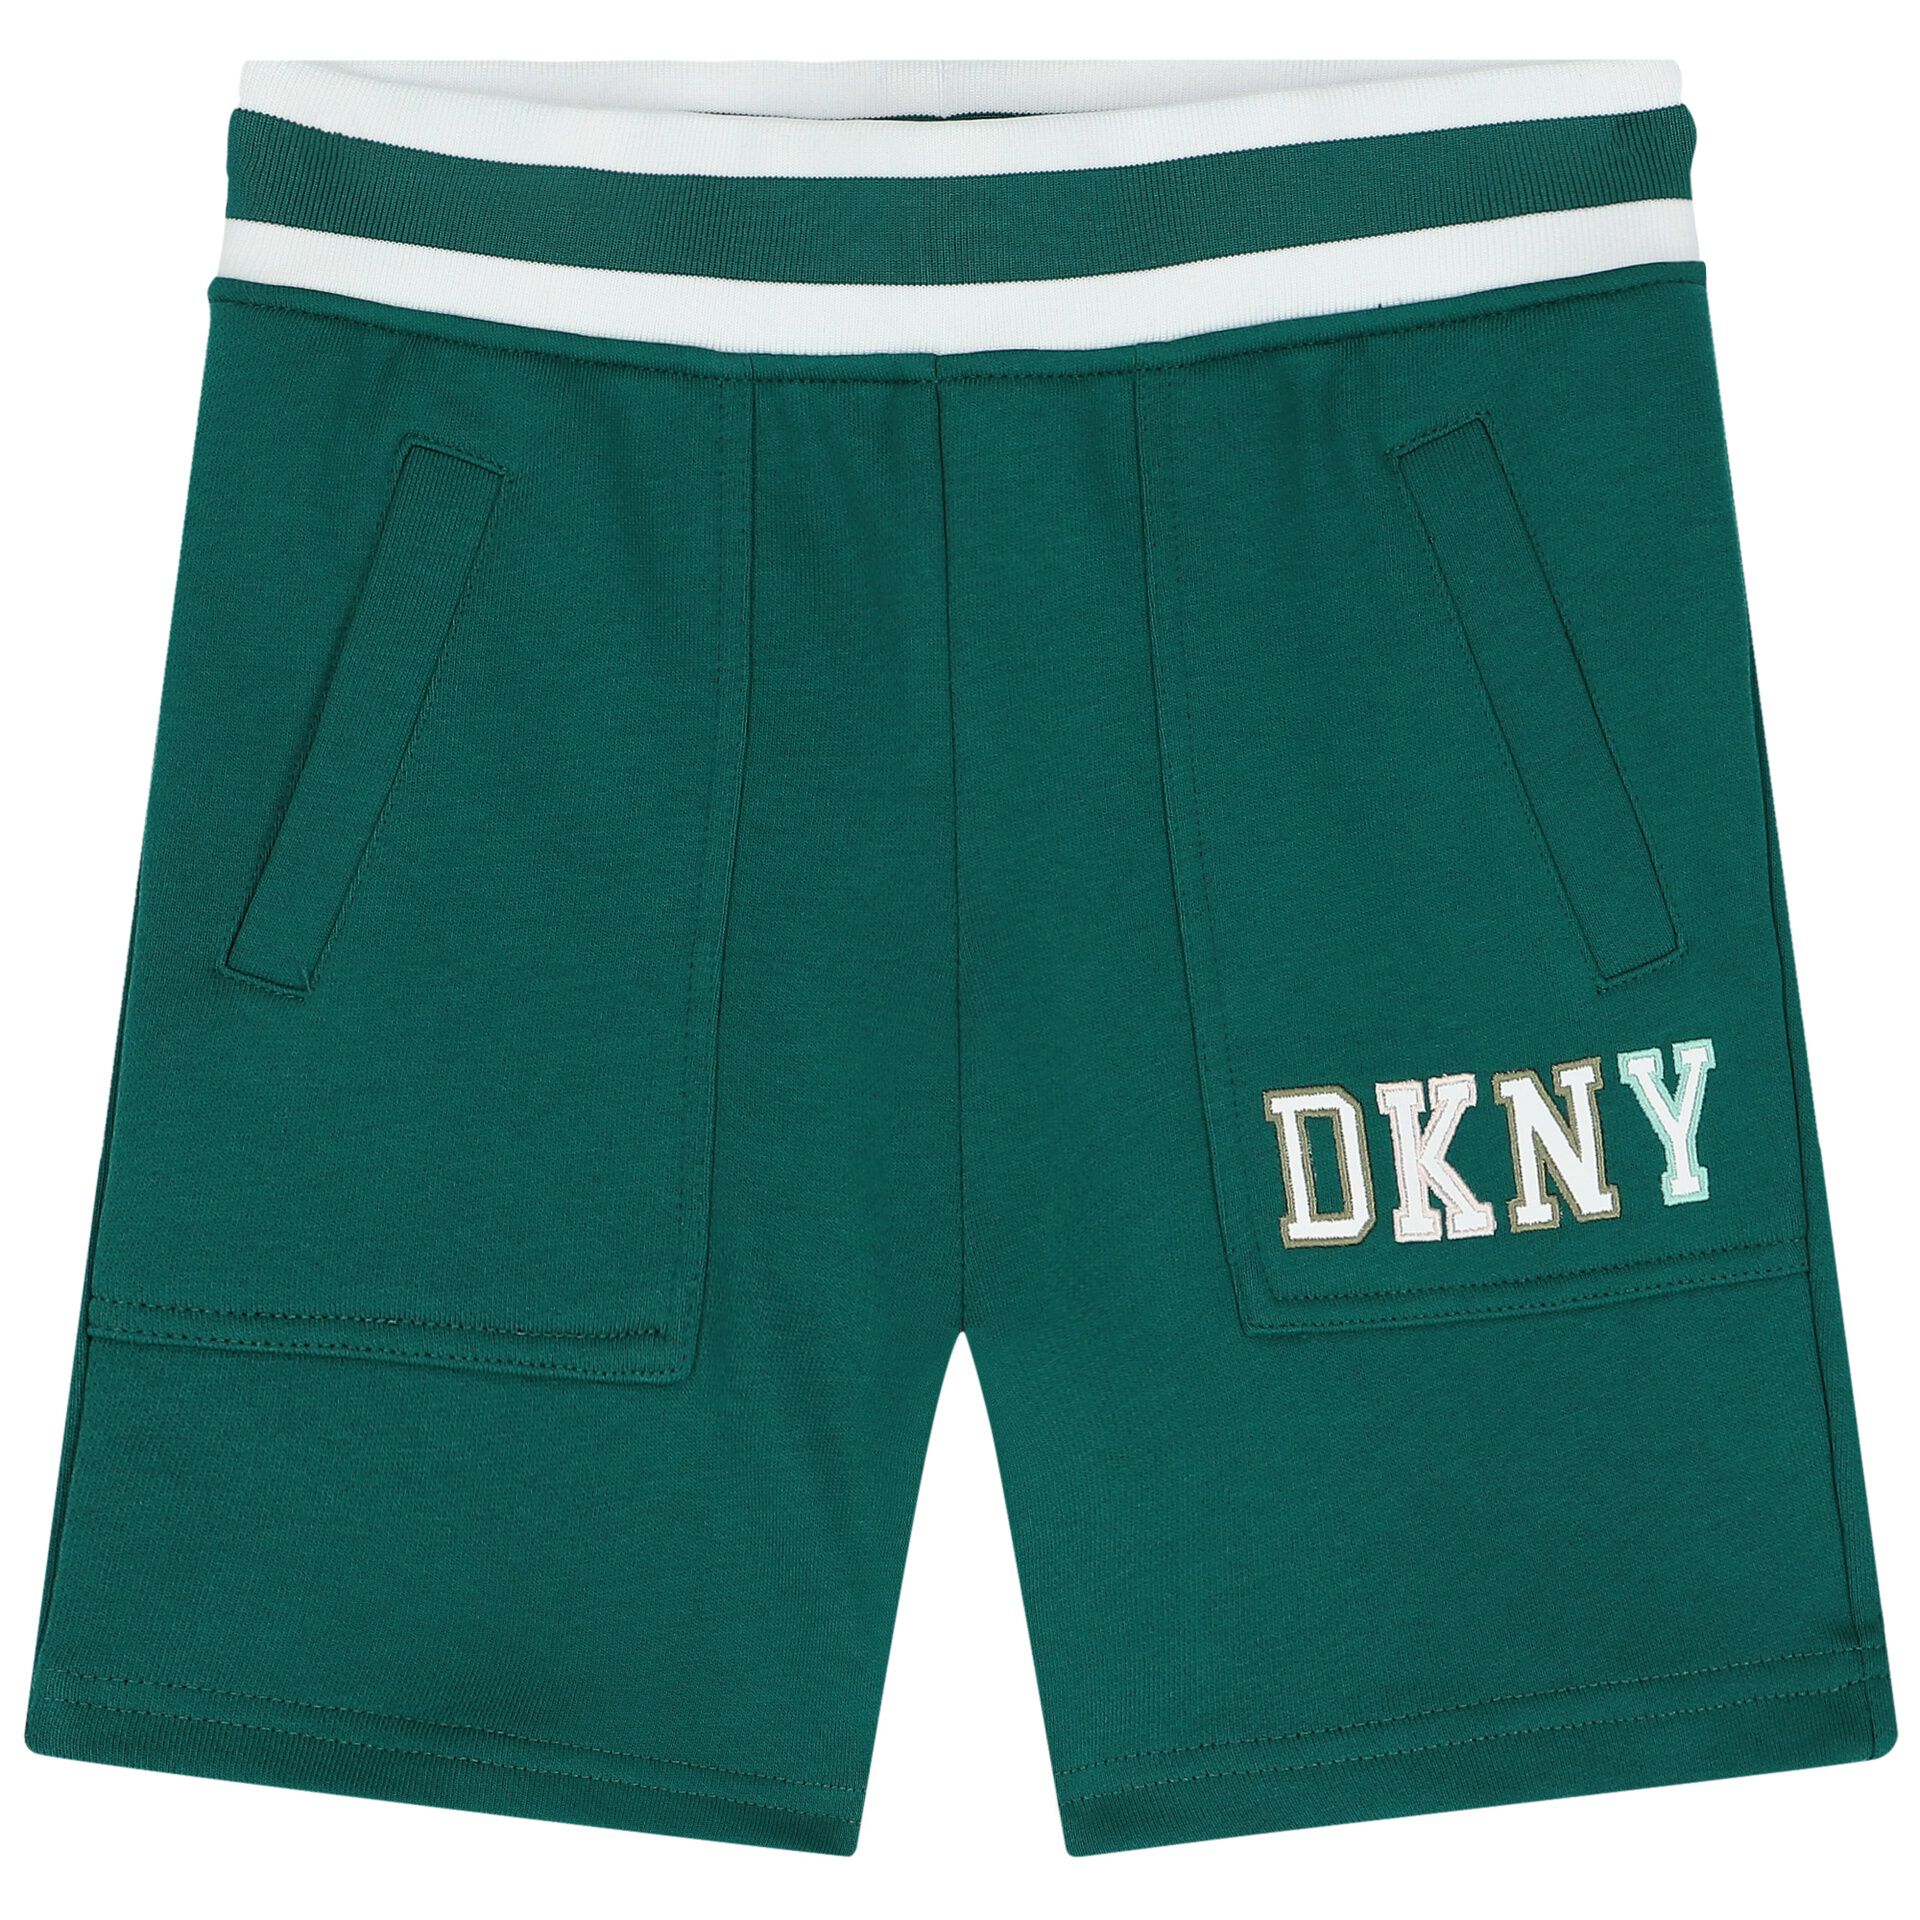 Short DKNY Kids color Green